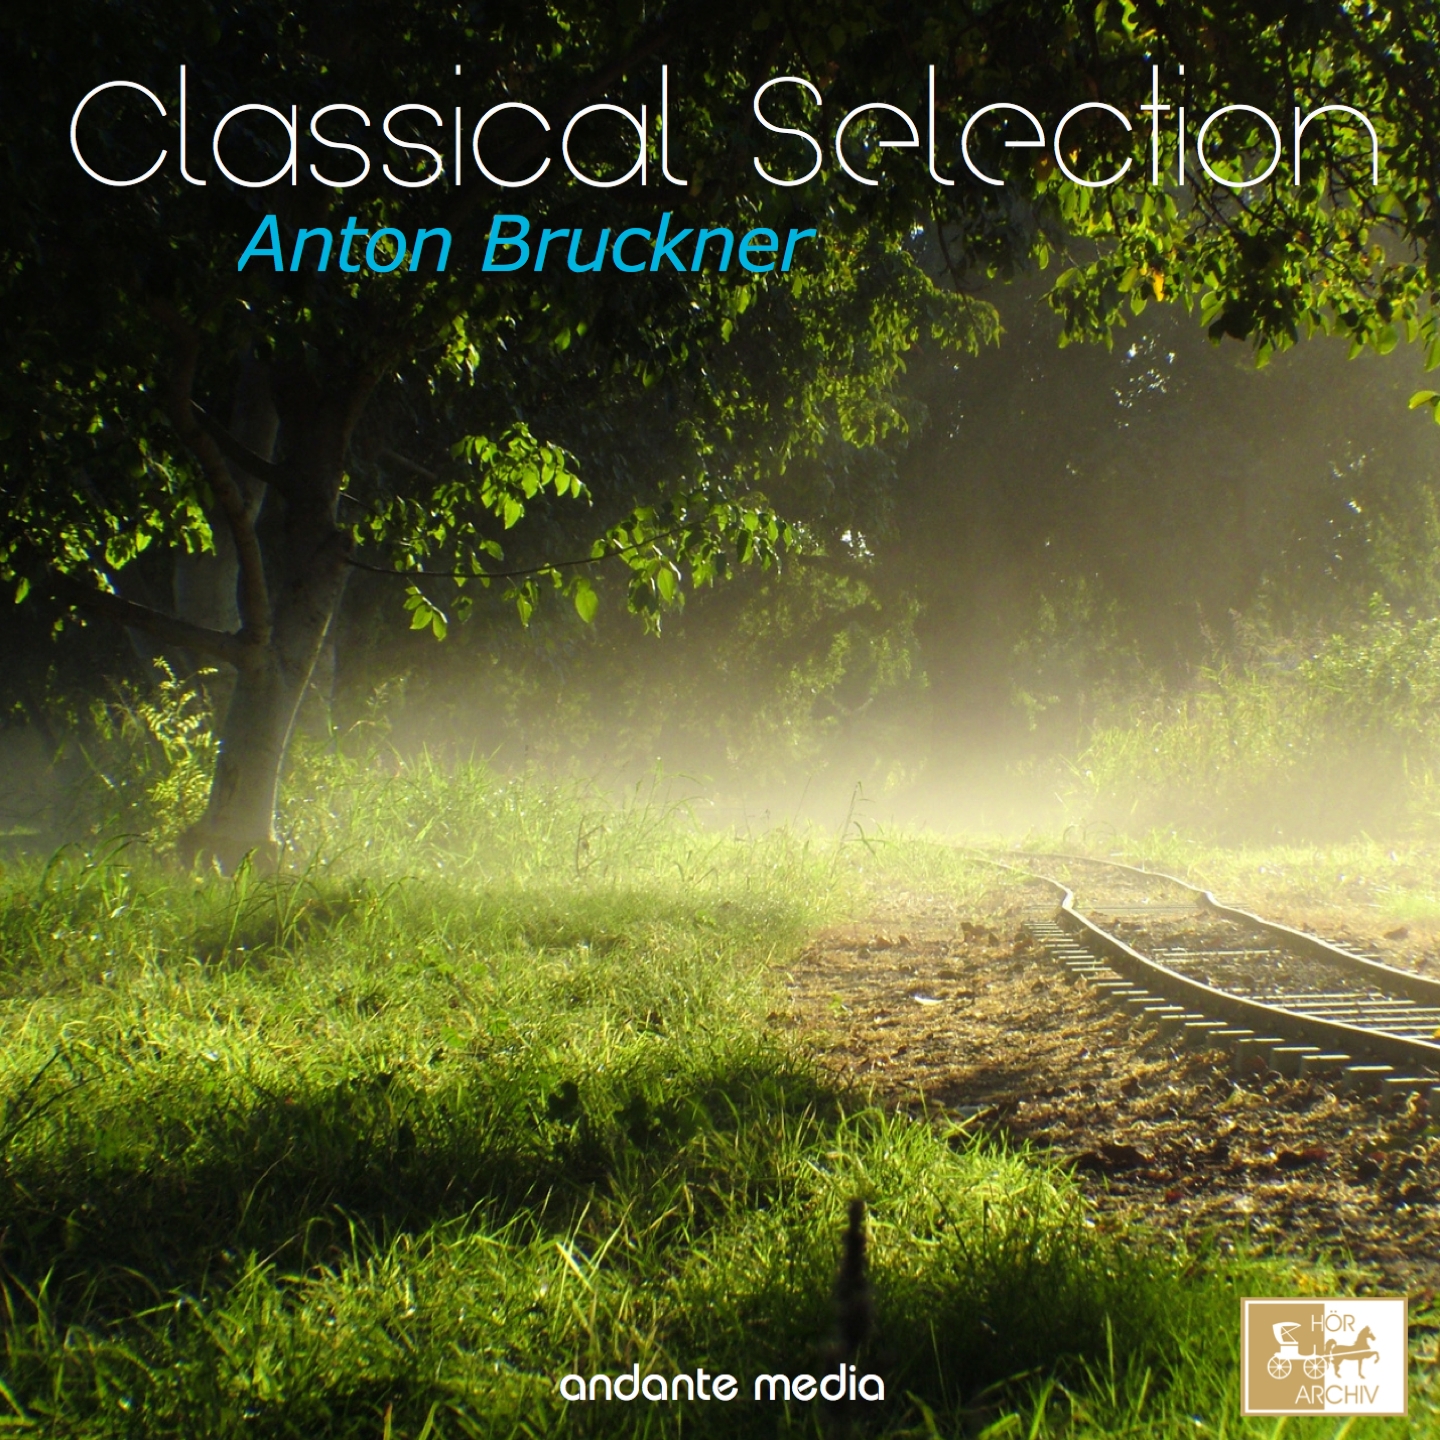 Classical Selection: Anton Bruckner